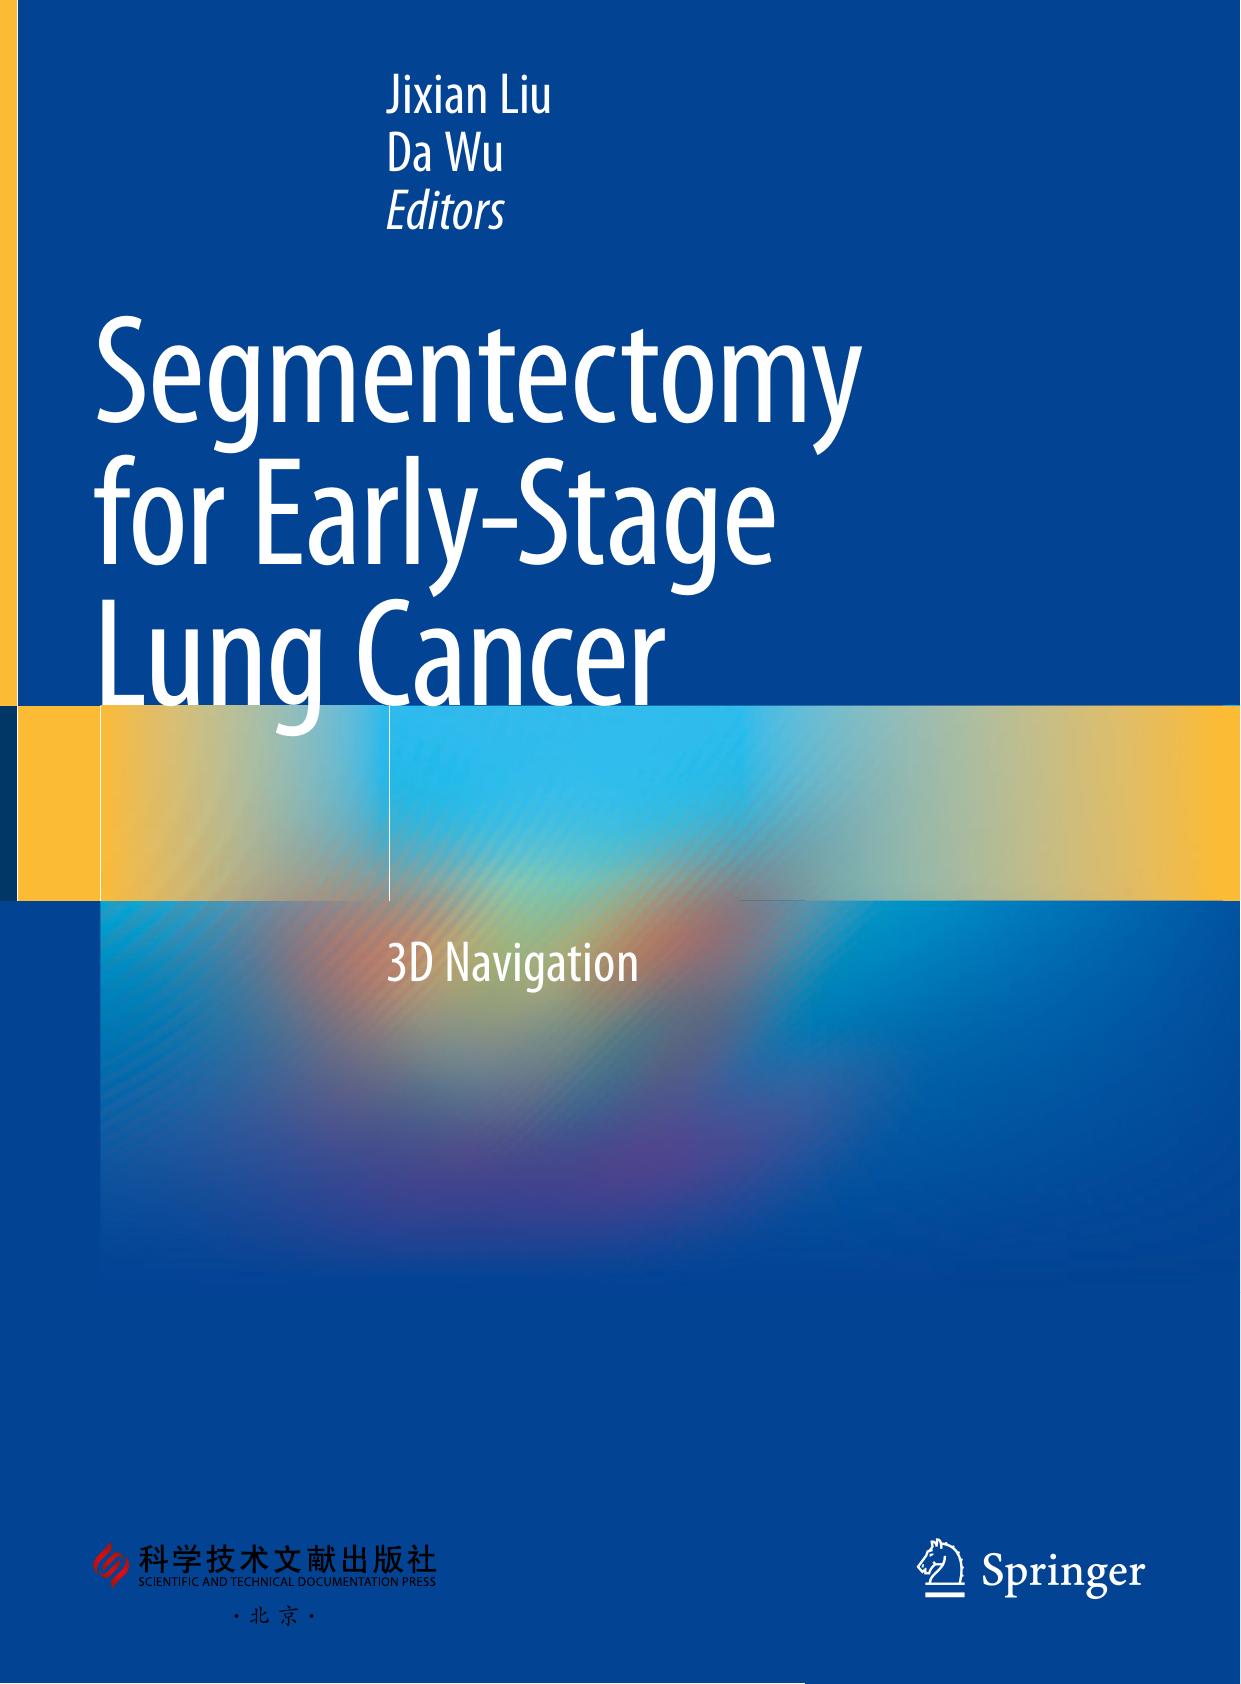 Segmentectomy for Early-Stage Lung Cancer: 3D Navigation by Jixian Liu Da Wu